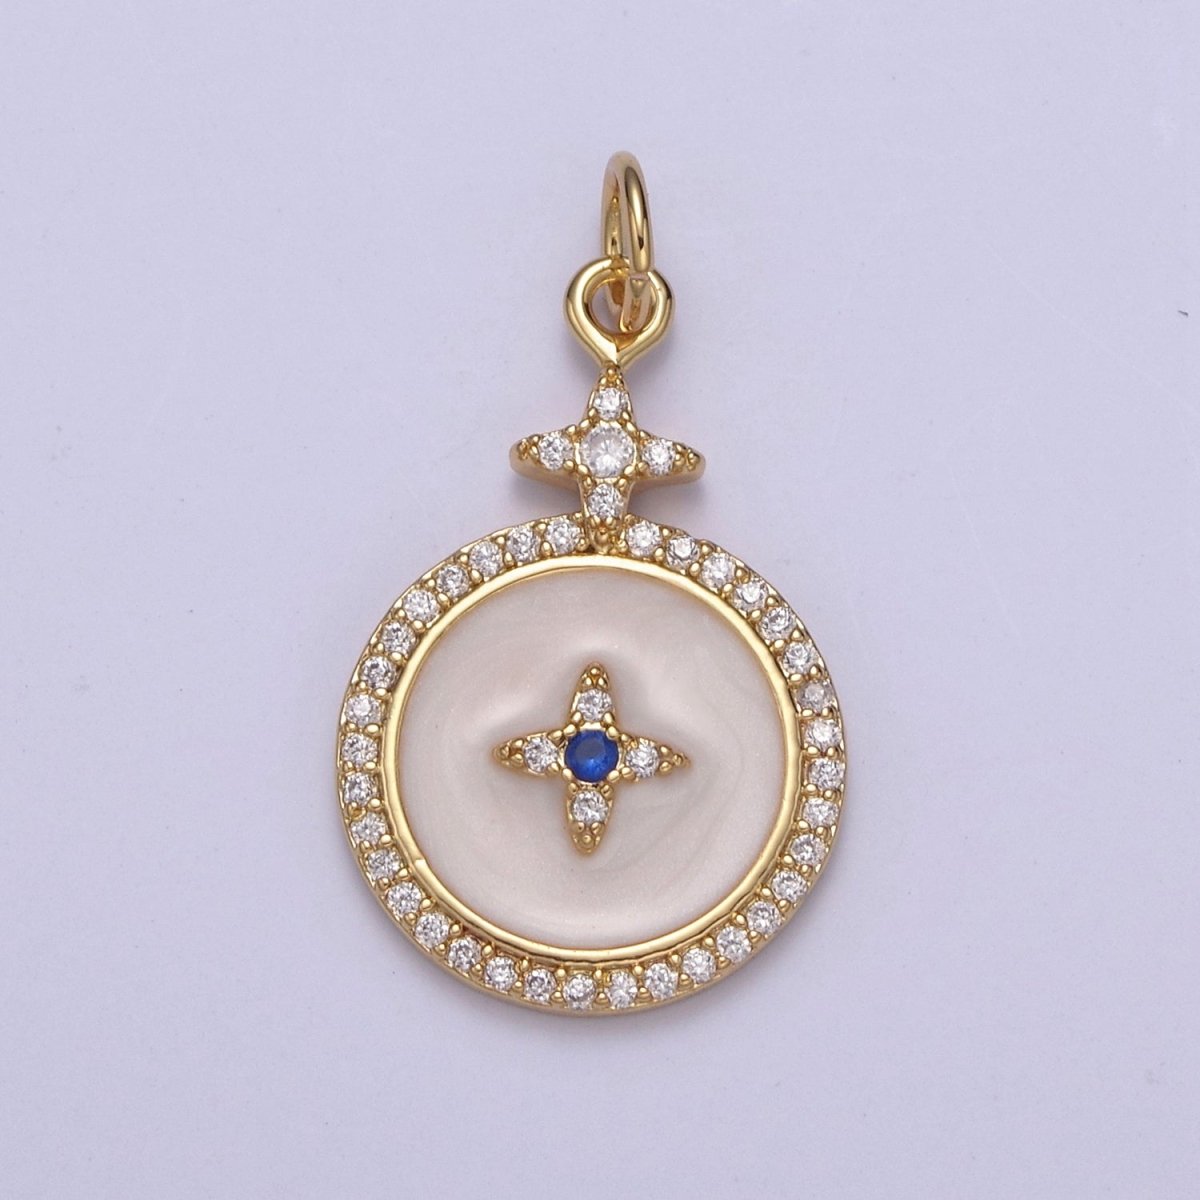 Dainty Enamel 14K Gold Filled North Star Charm White Medallion Star Charm for DIY Jewelry Making N-751 - DLUXCA